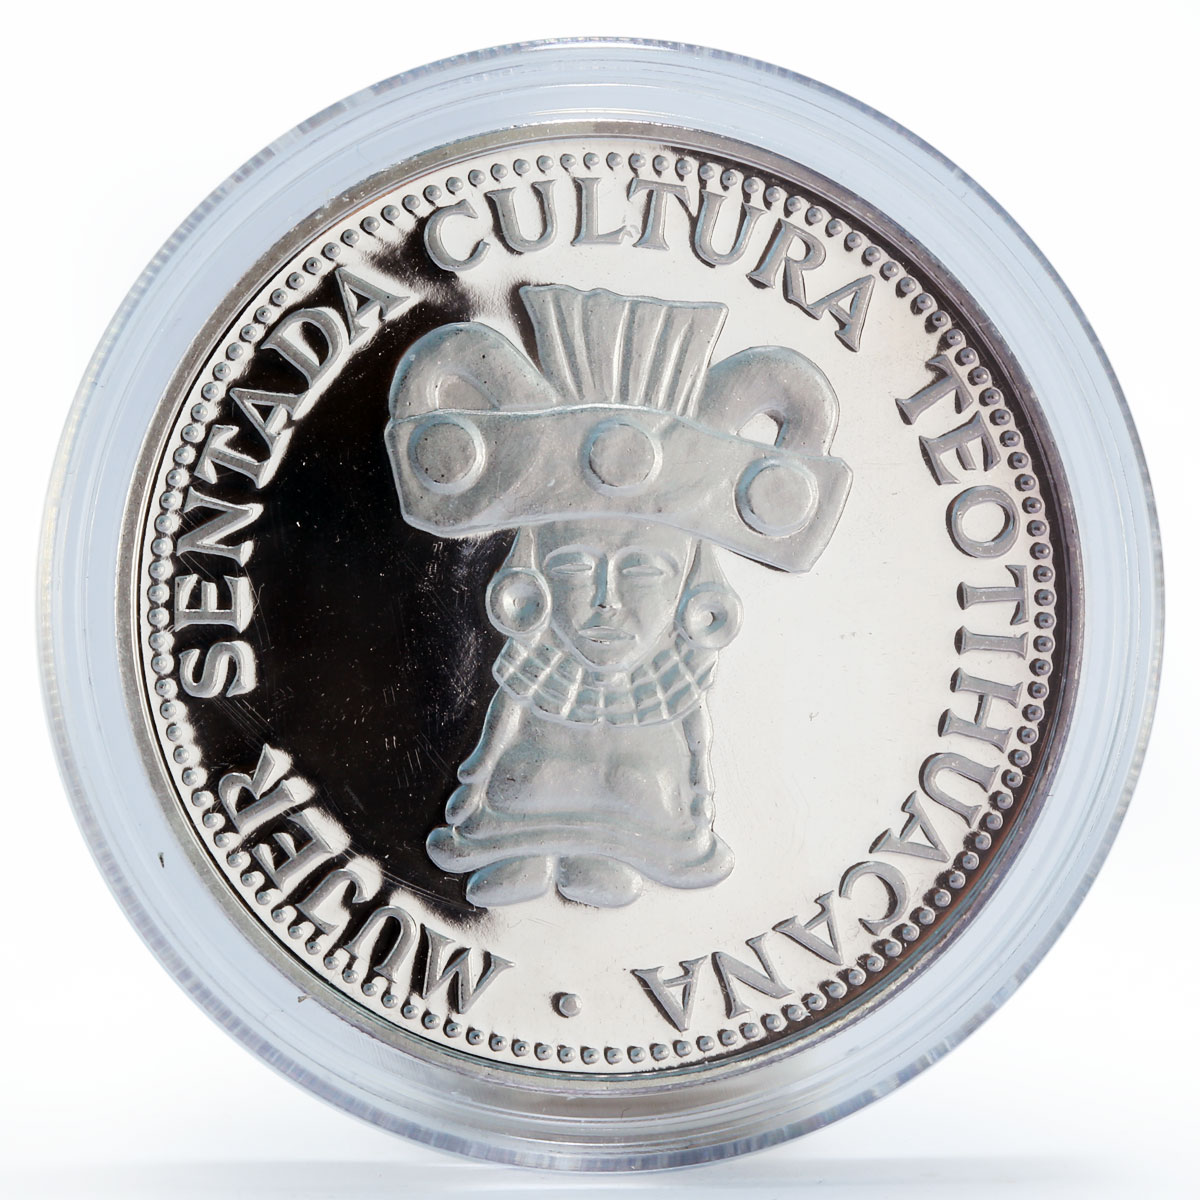 Paraguay 150 guaranies Teotihucana Culture csulpture proof silver coin 1973